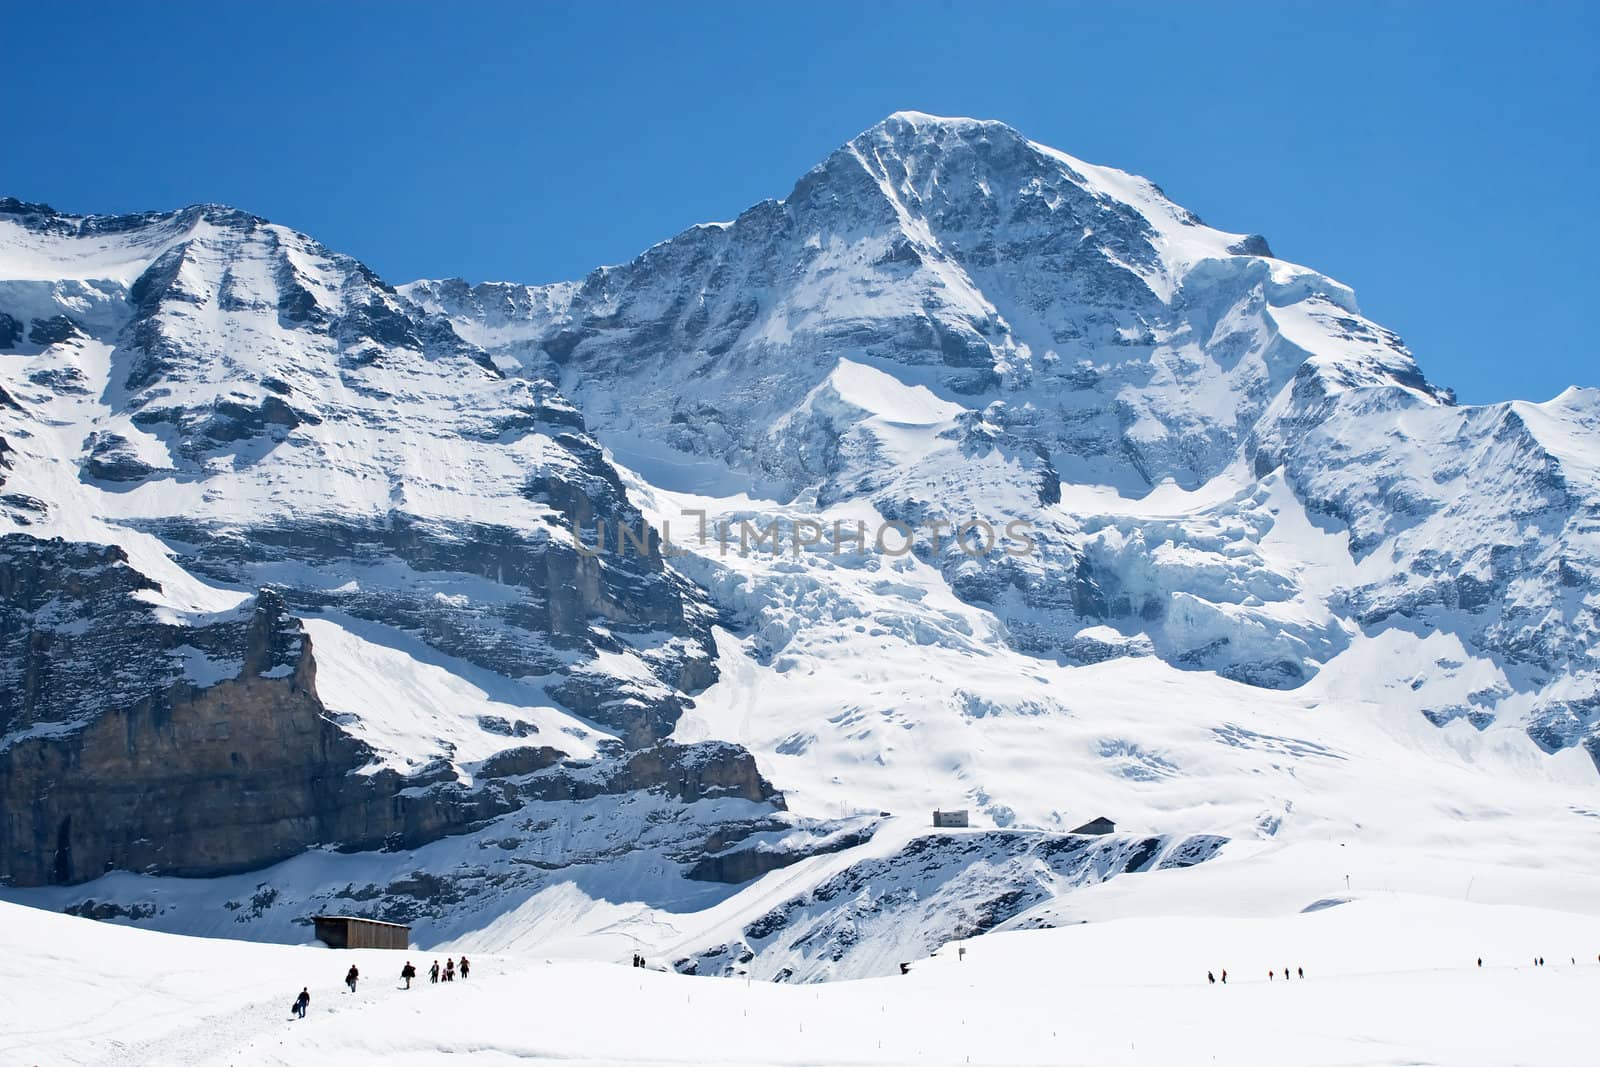 Jungfrau region by swisshippo